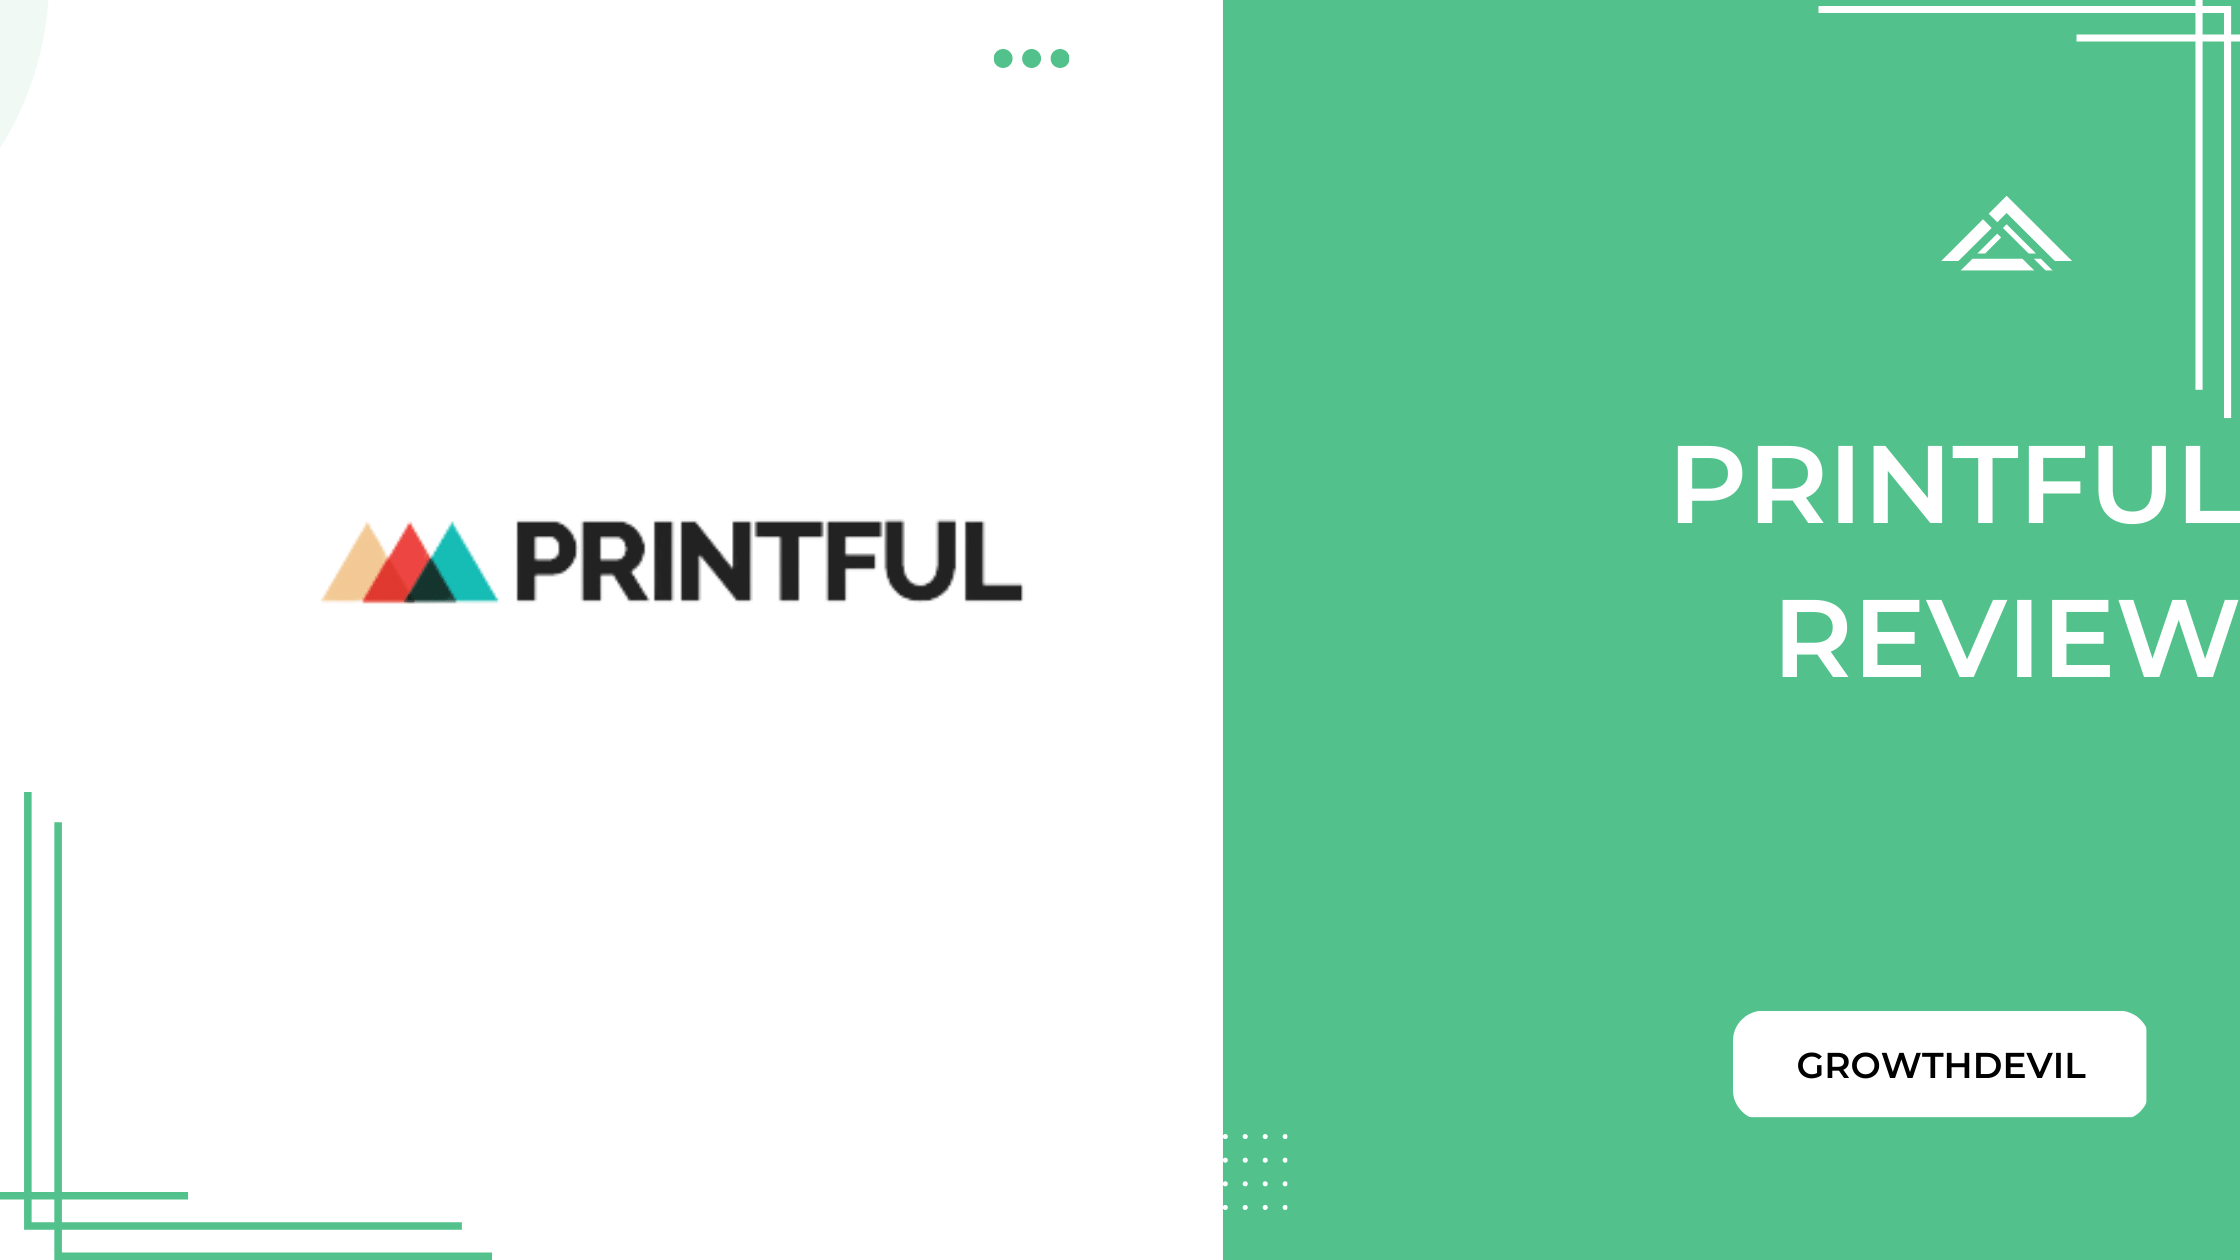 Printful Review - GrowthDevil